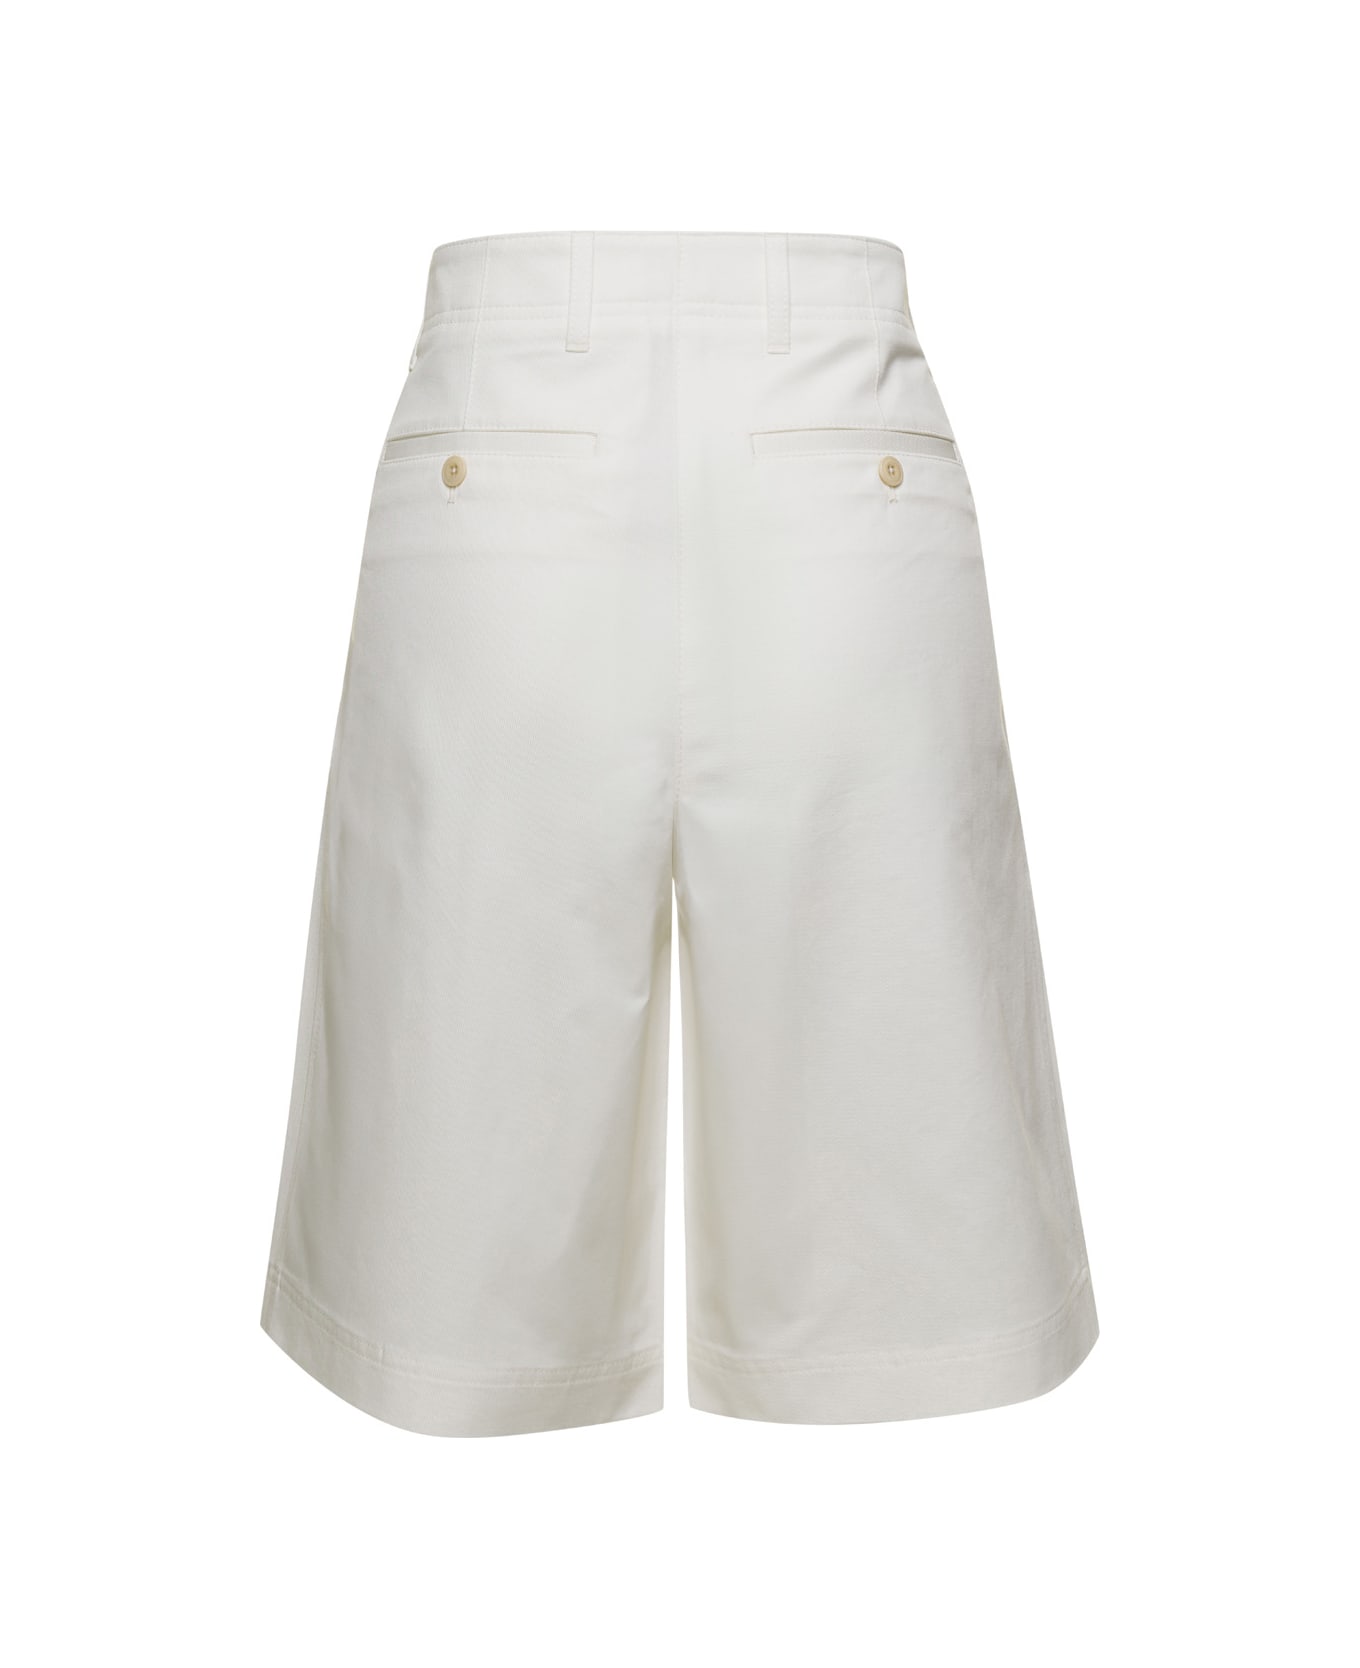 Totême White Twill Pleated Bermuda Shorts In Cotton Woman - White